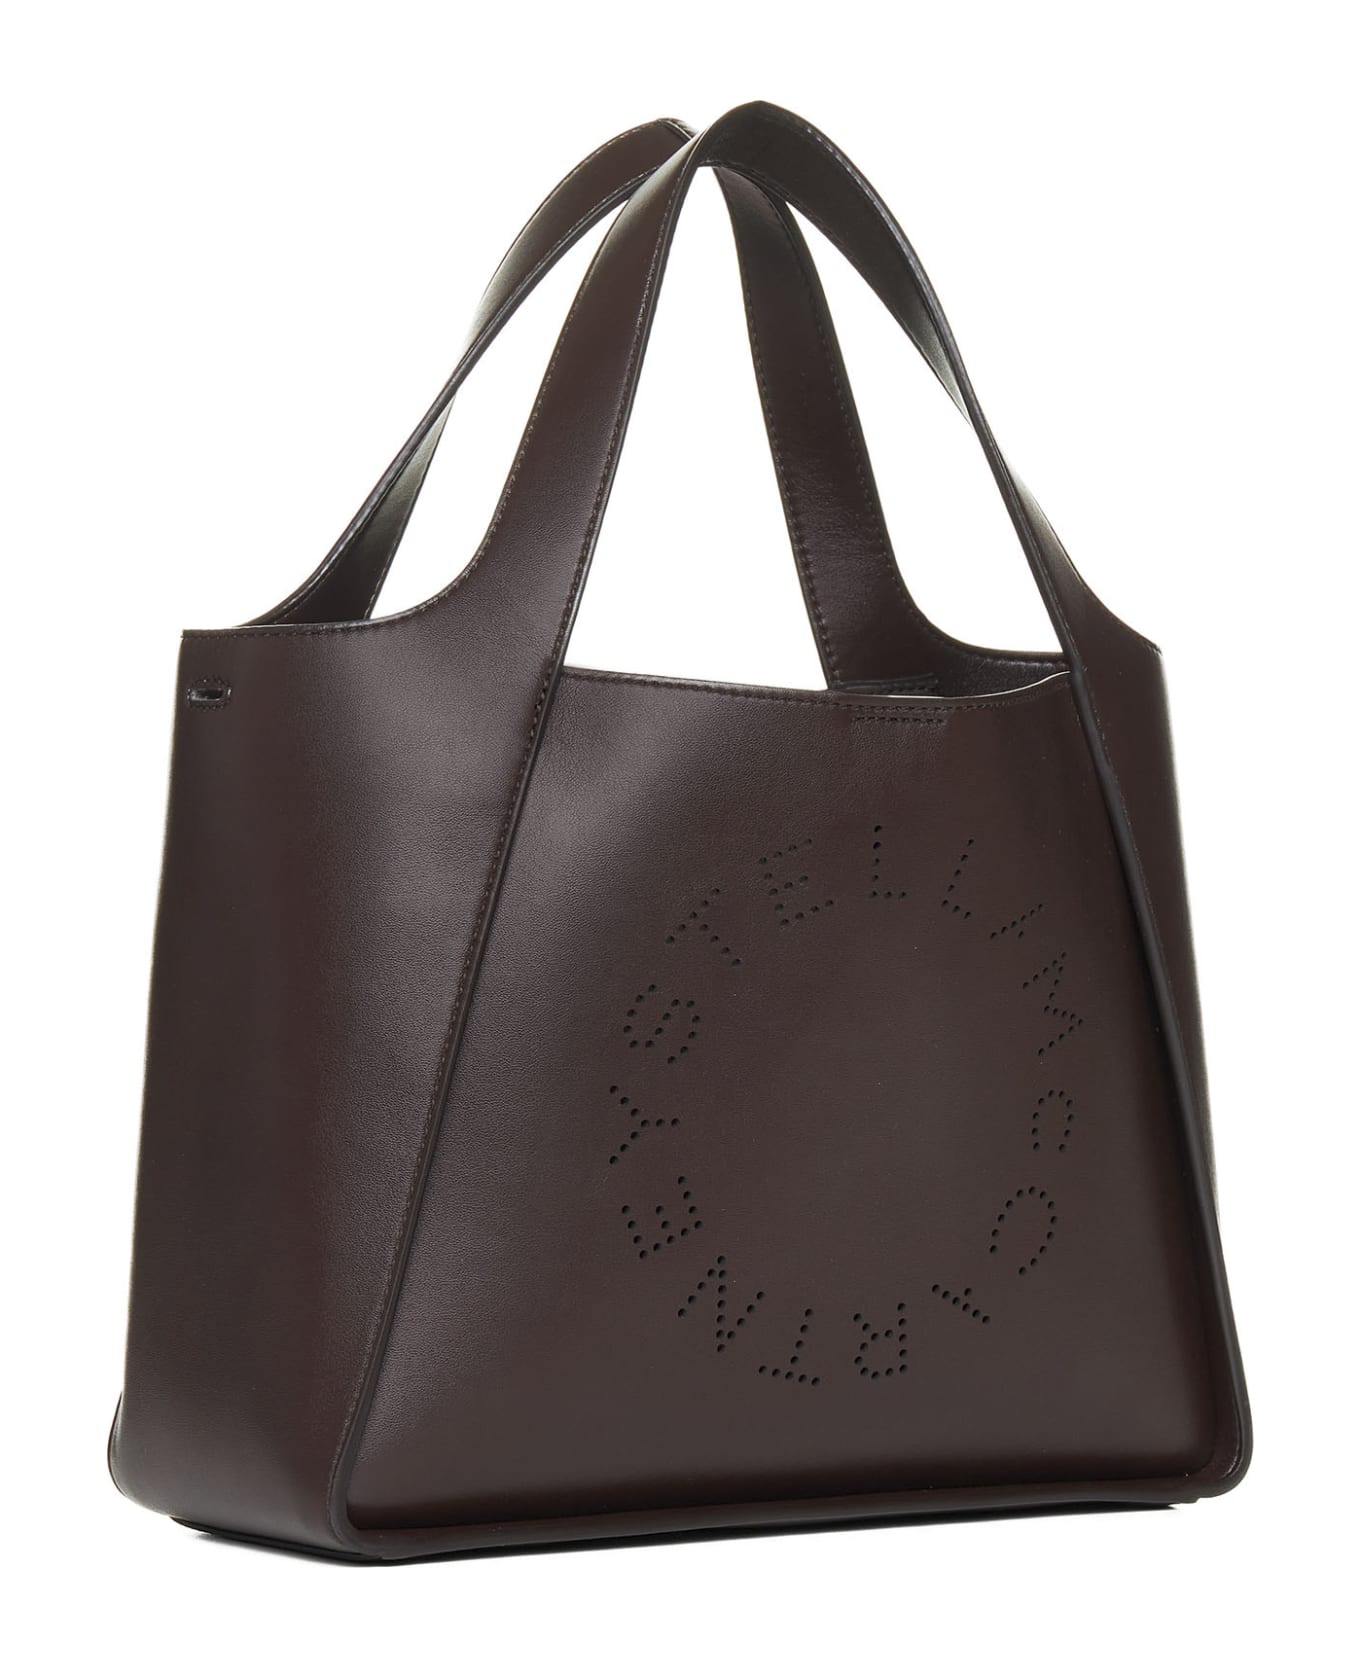 Stella McCartney Stella Logo Shoulder Bag - Chocolate Brown